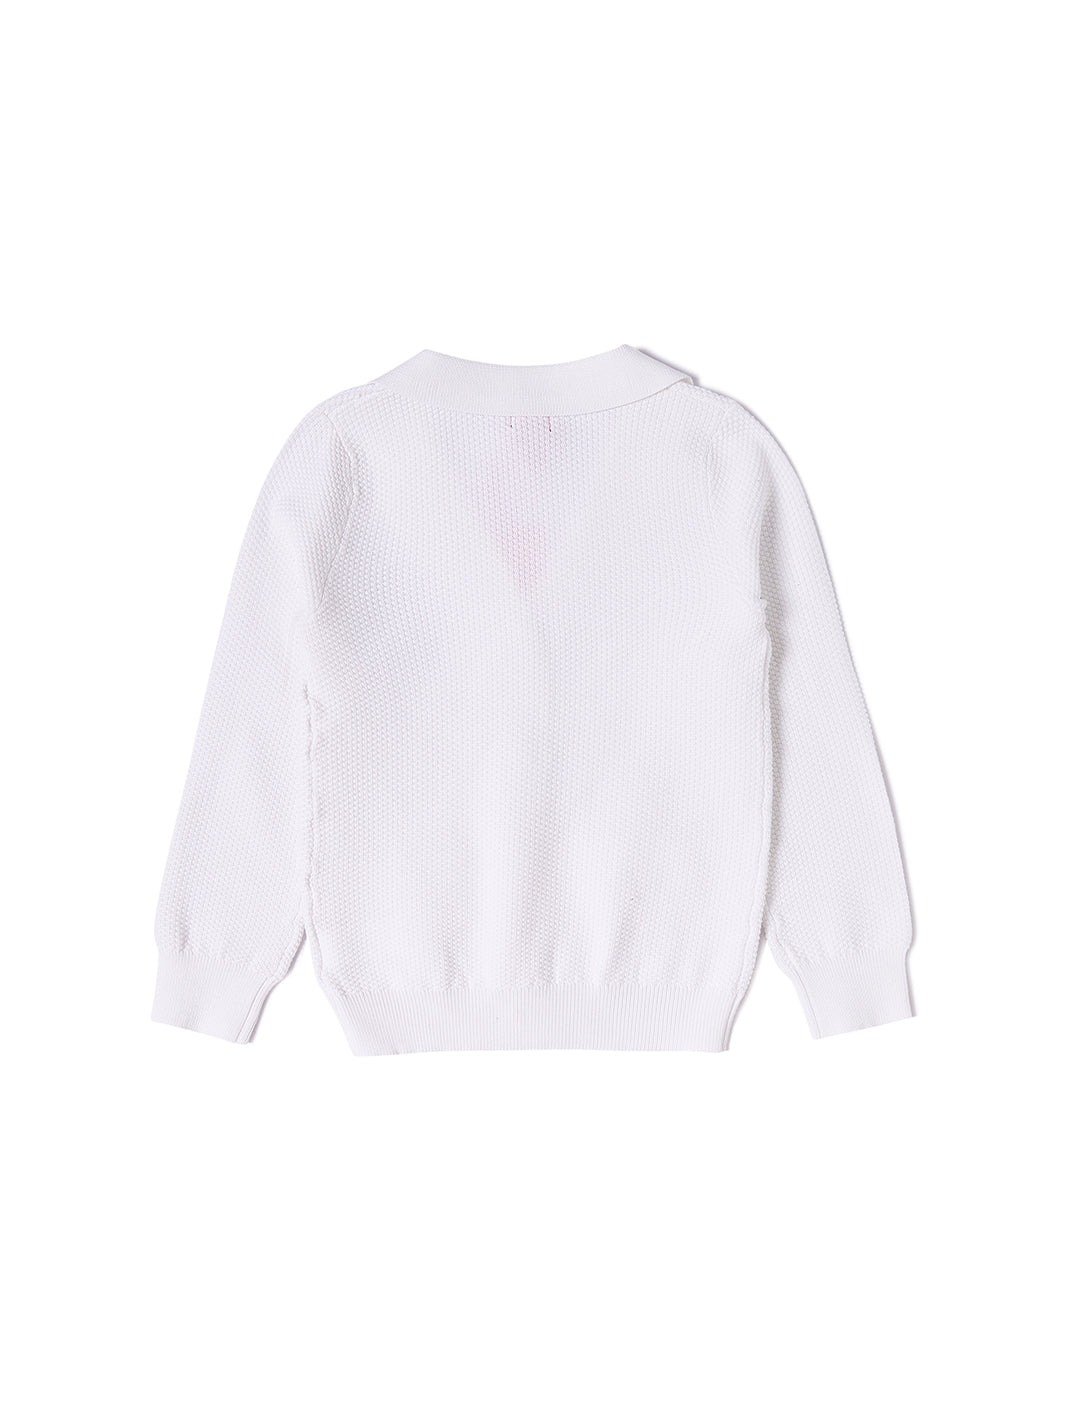 Blazer Bomber Style Sweater - White